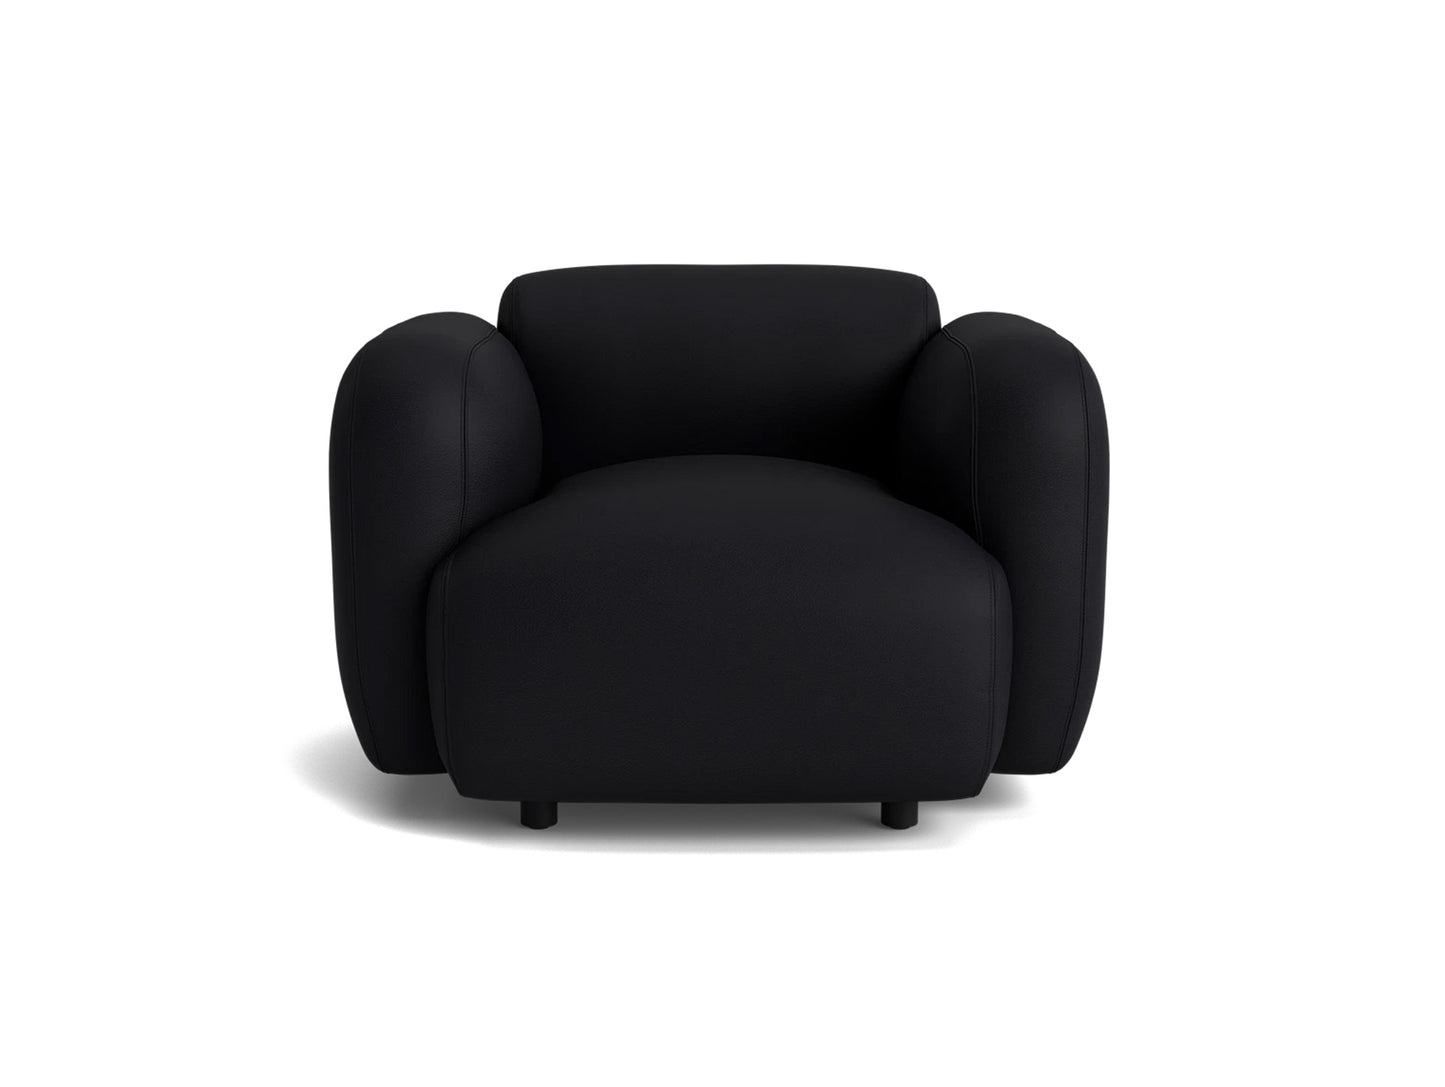 Swell Armchair by Normann Copenhagen - Ultra Leather 41599